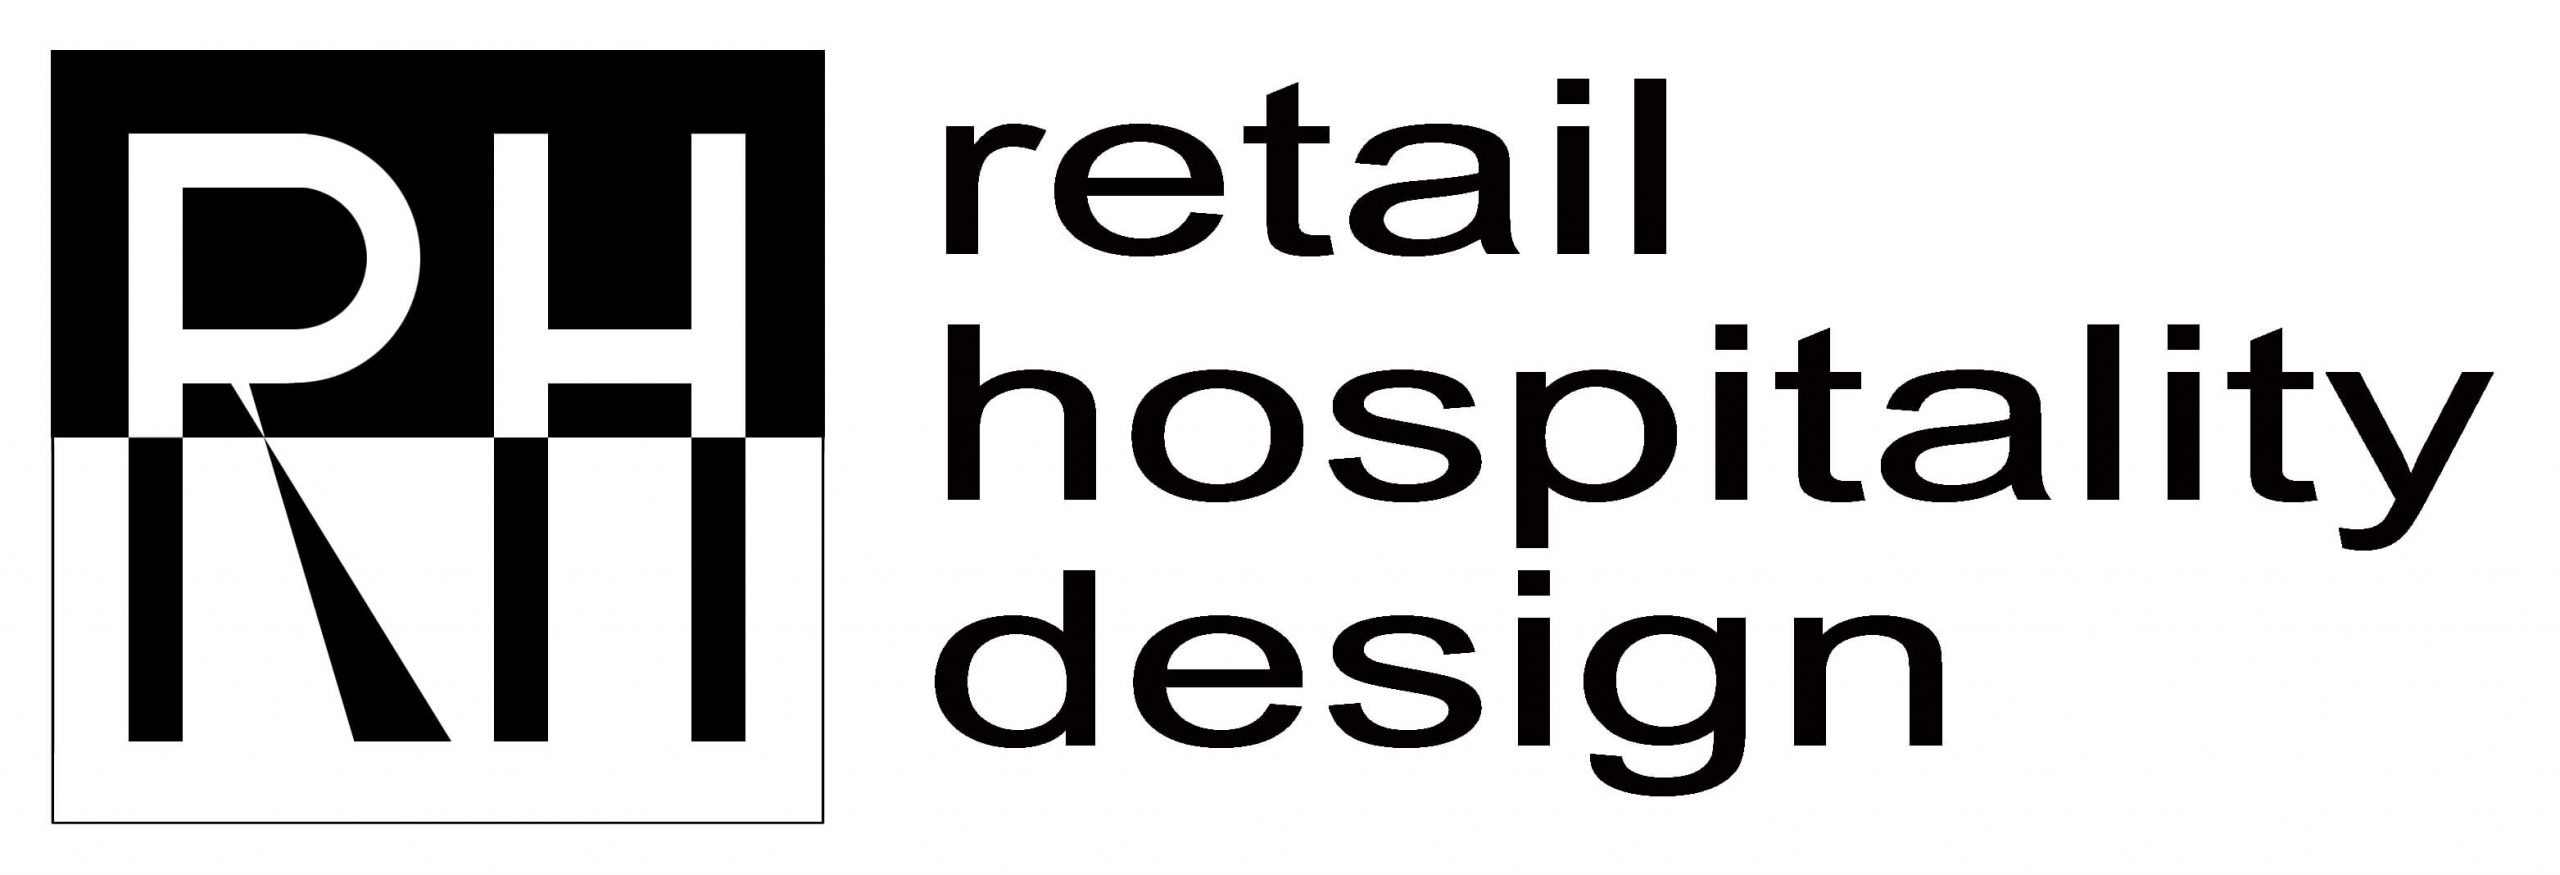 Retail Hospitality Design